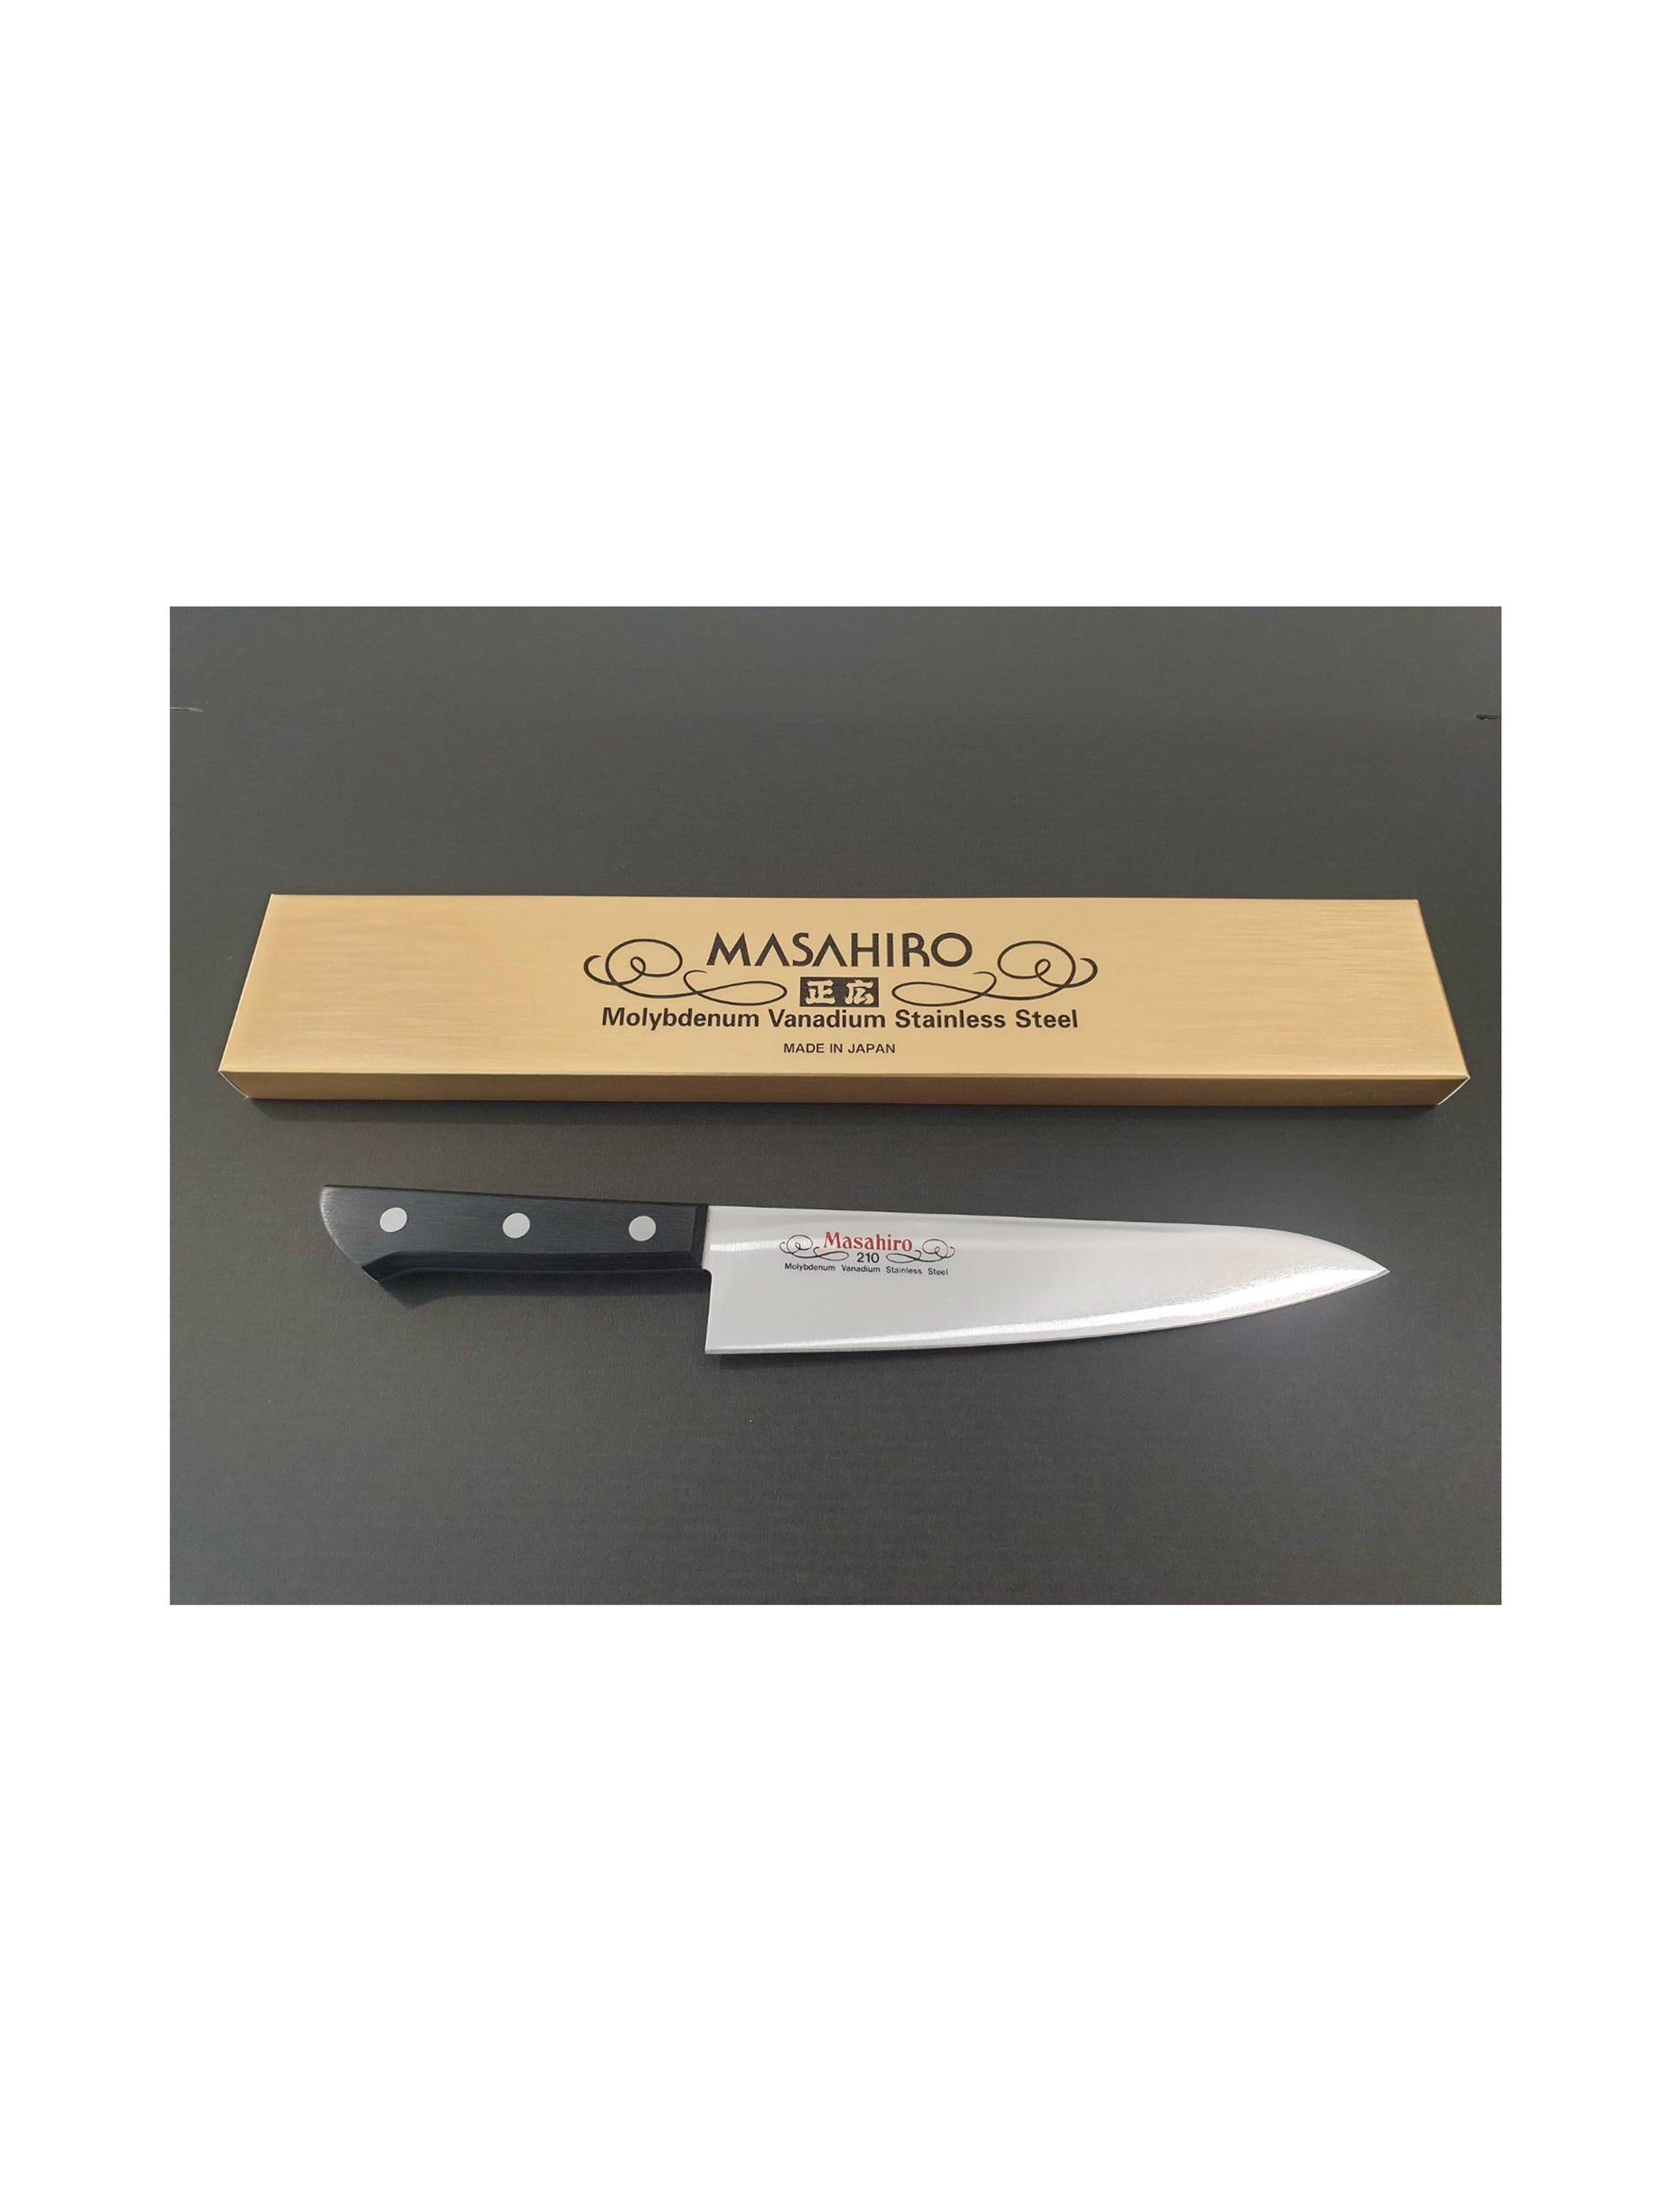 MASAHIRO MV Knives, Japanese Knife, Made In Japan - Buy MASAHIRO MV Knives, Japanese  Knife, Made In Japan Product on